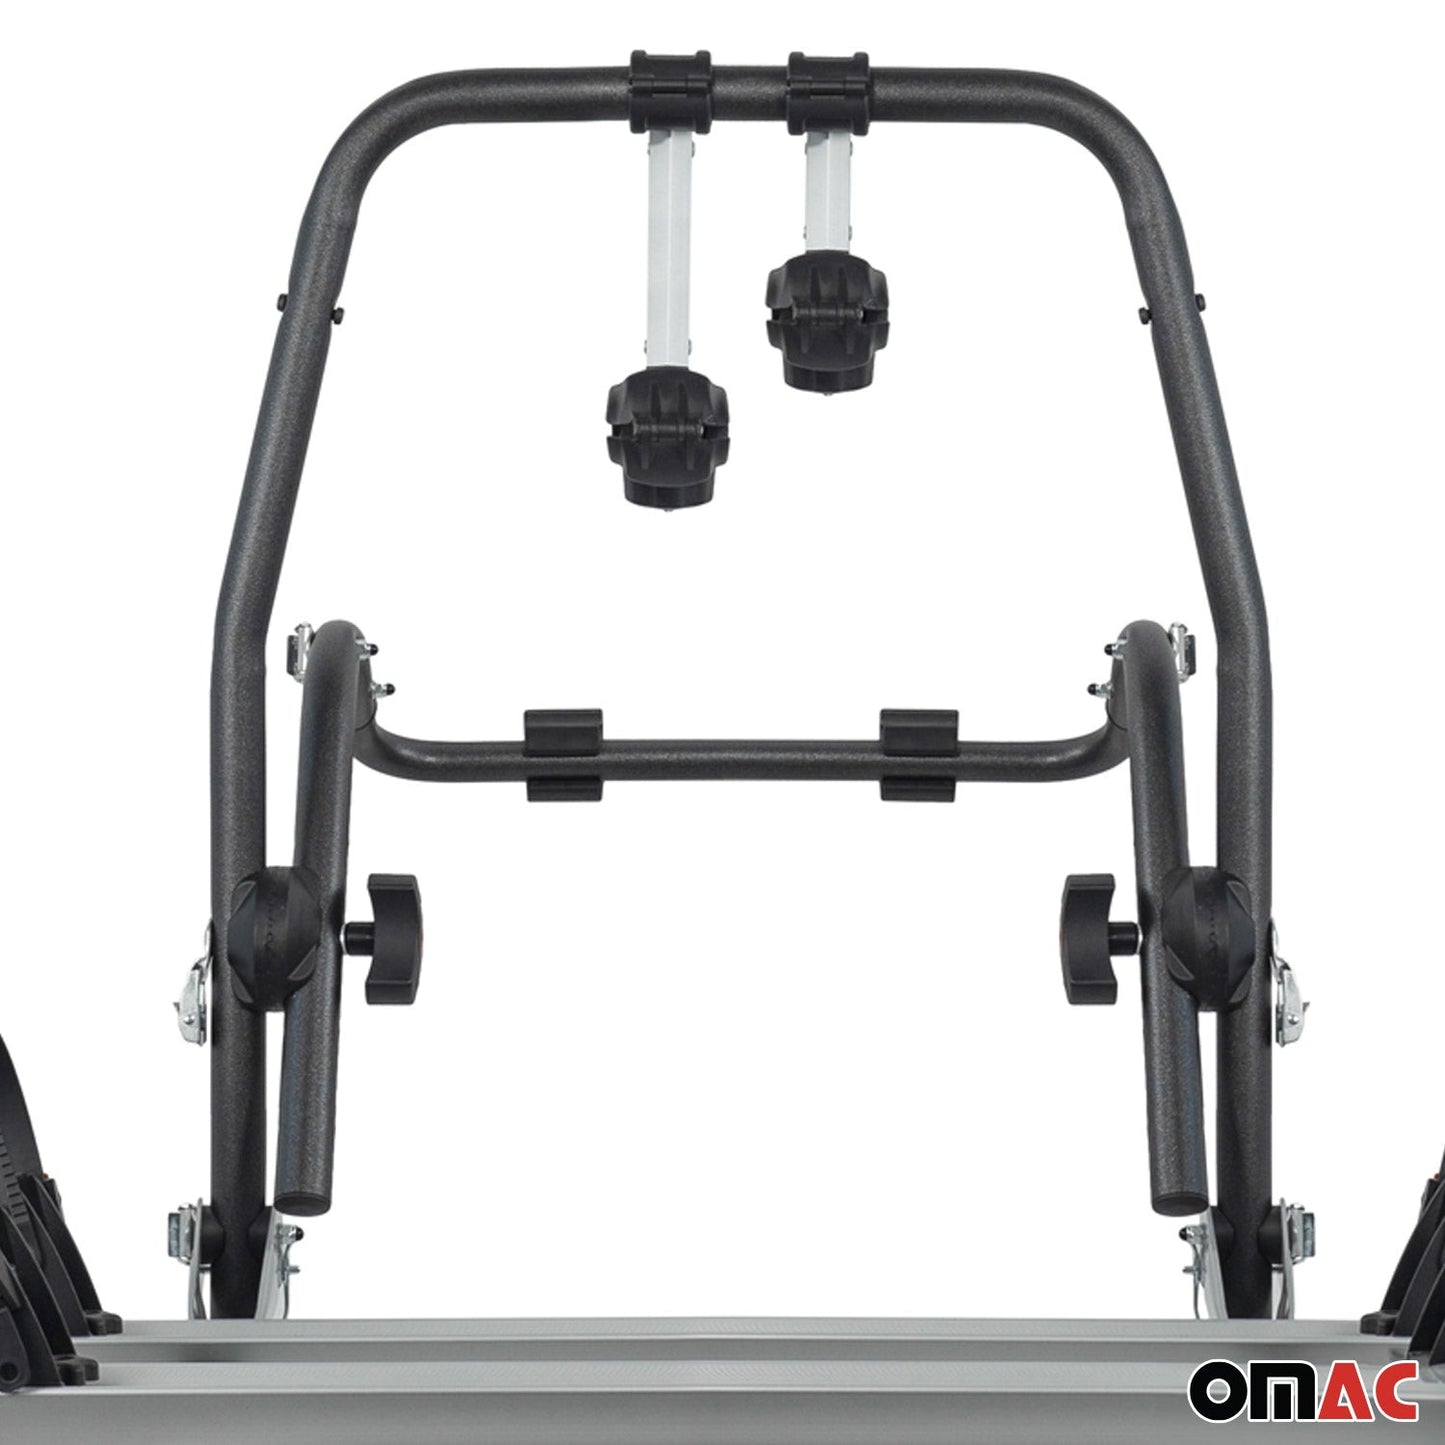 OMAC Alu 2 Bike Rack Carrier Hitch Mount for Infiniti Q50 2014-2023 Black Gray A054205